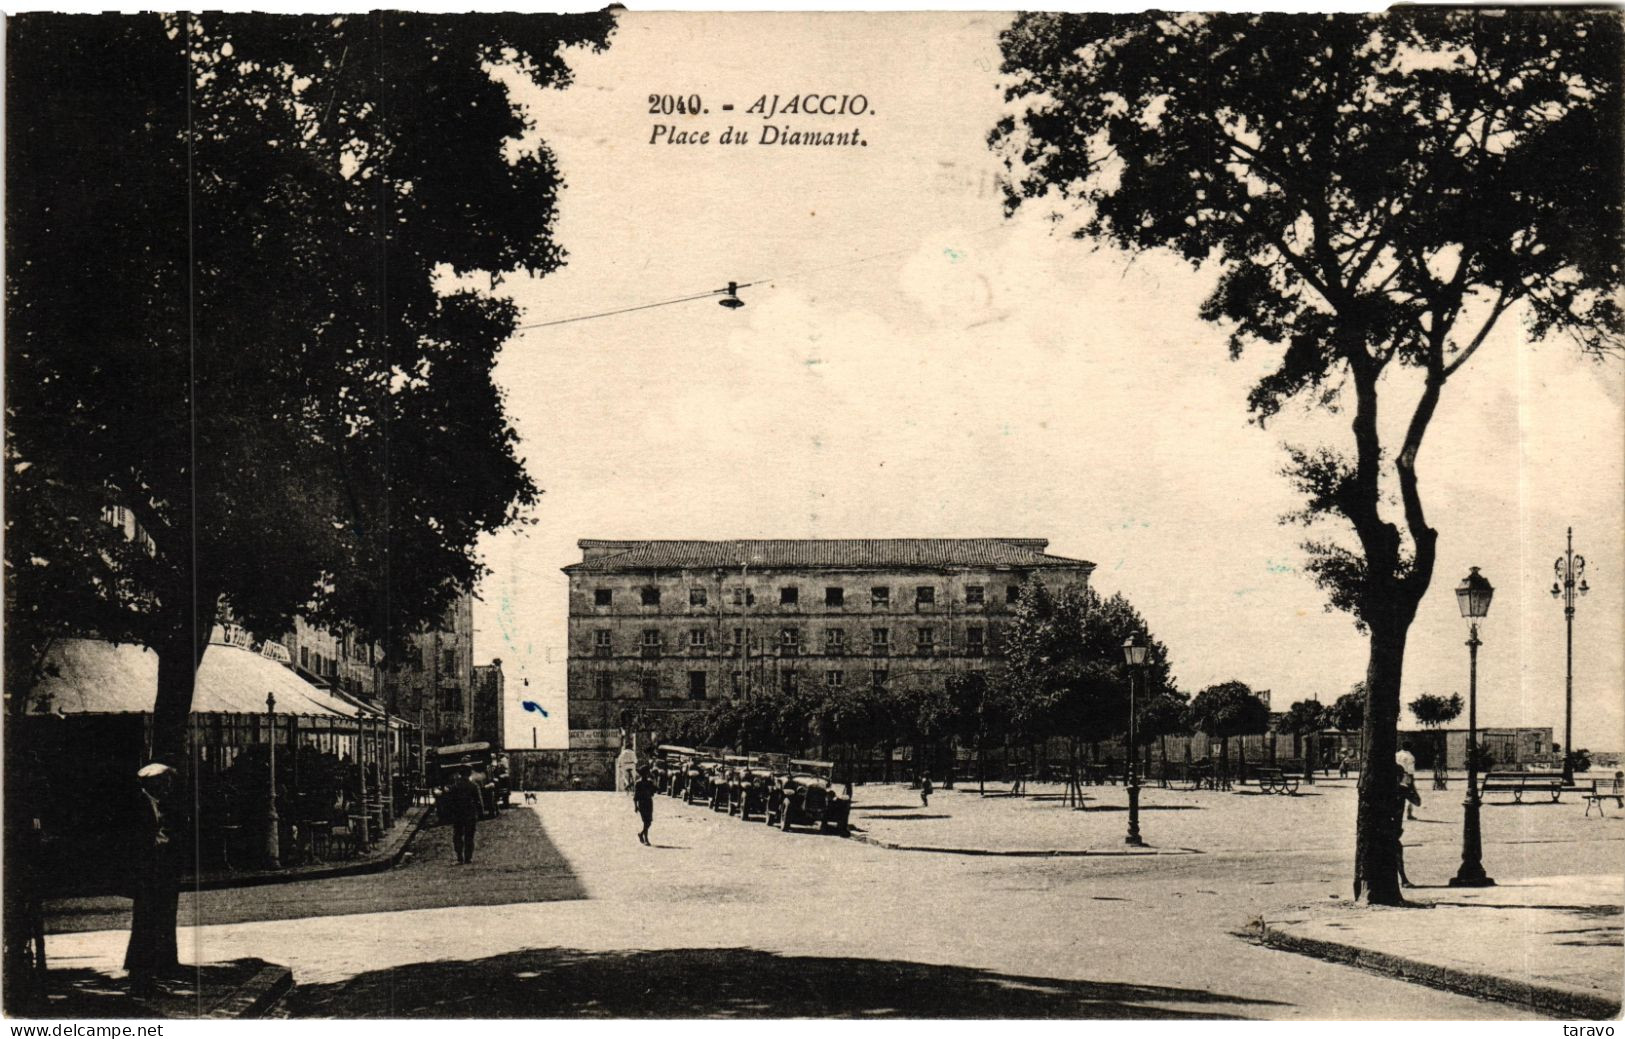 CORSE - AJACCIO - Les Taxis De La Place Du Diamant - 1945 - Ajaccio